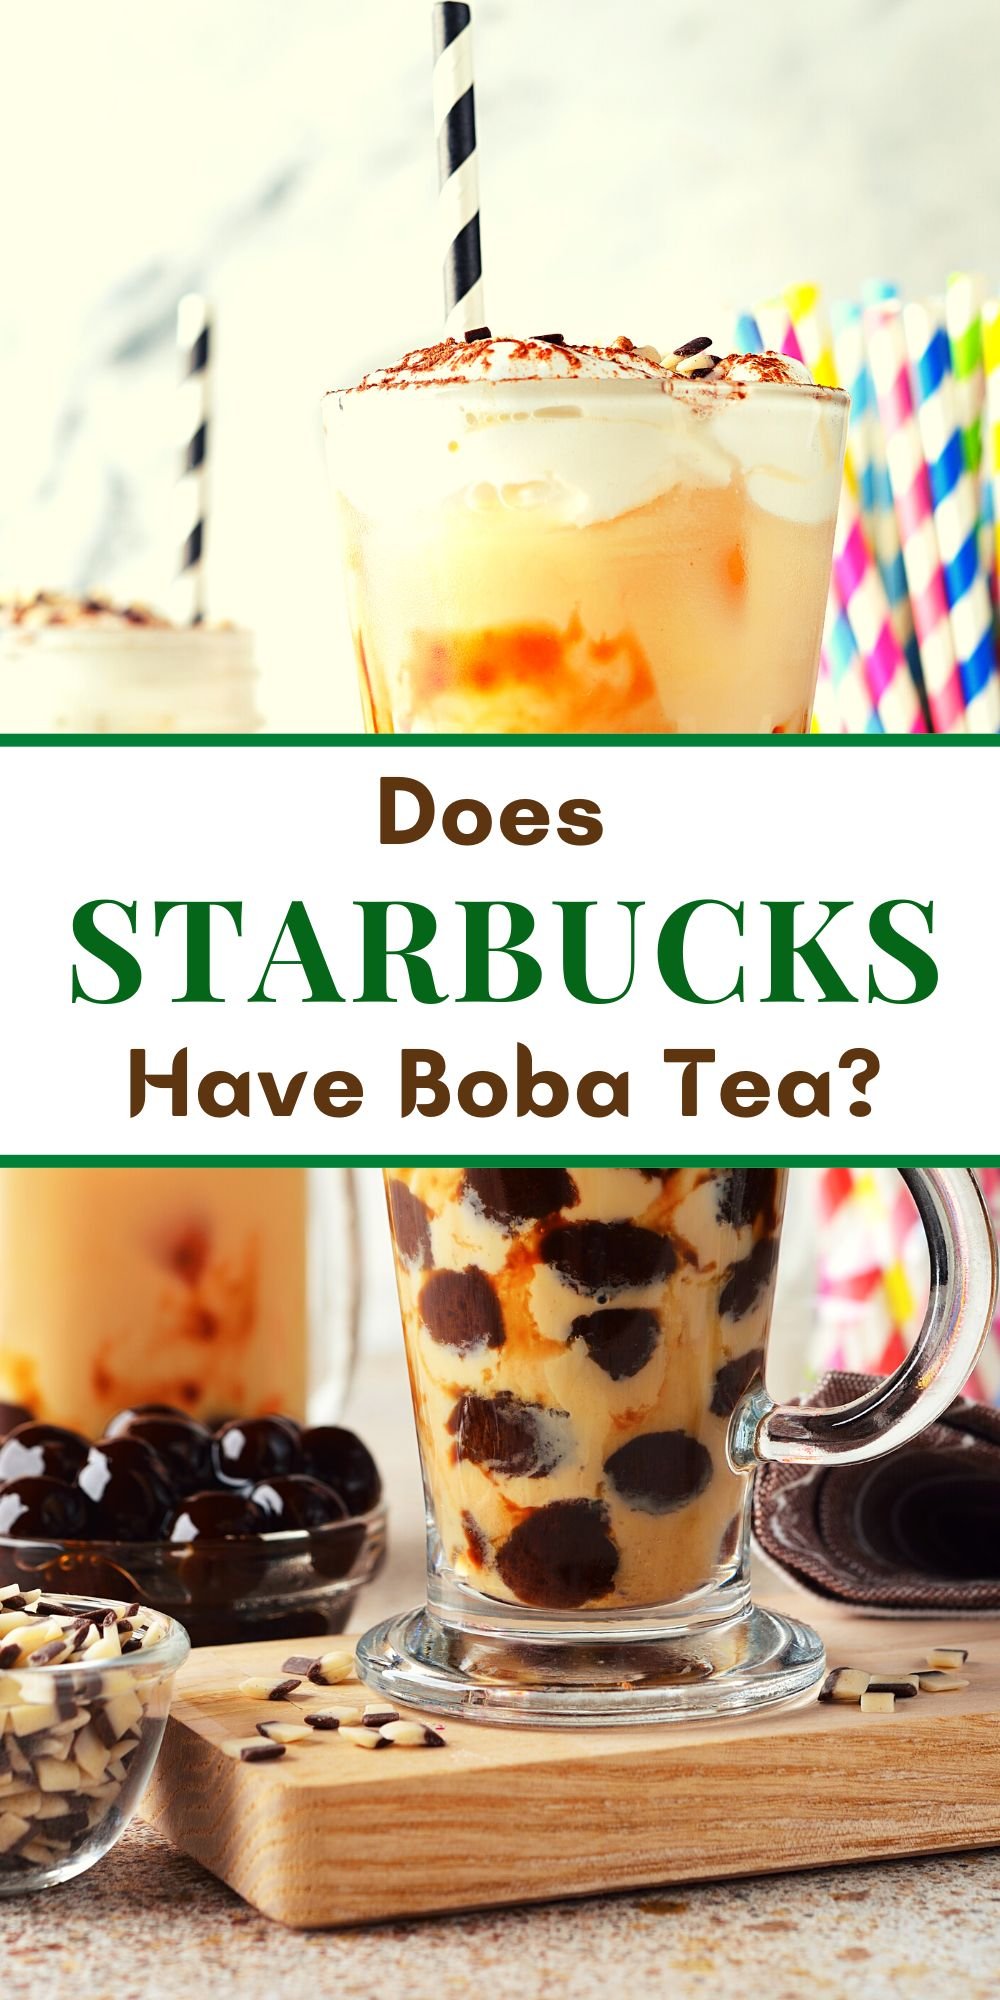 Does Starbucks Have Boba